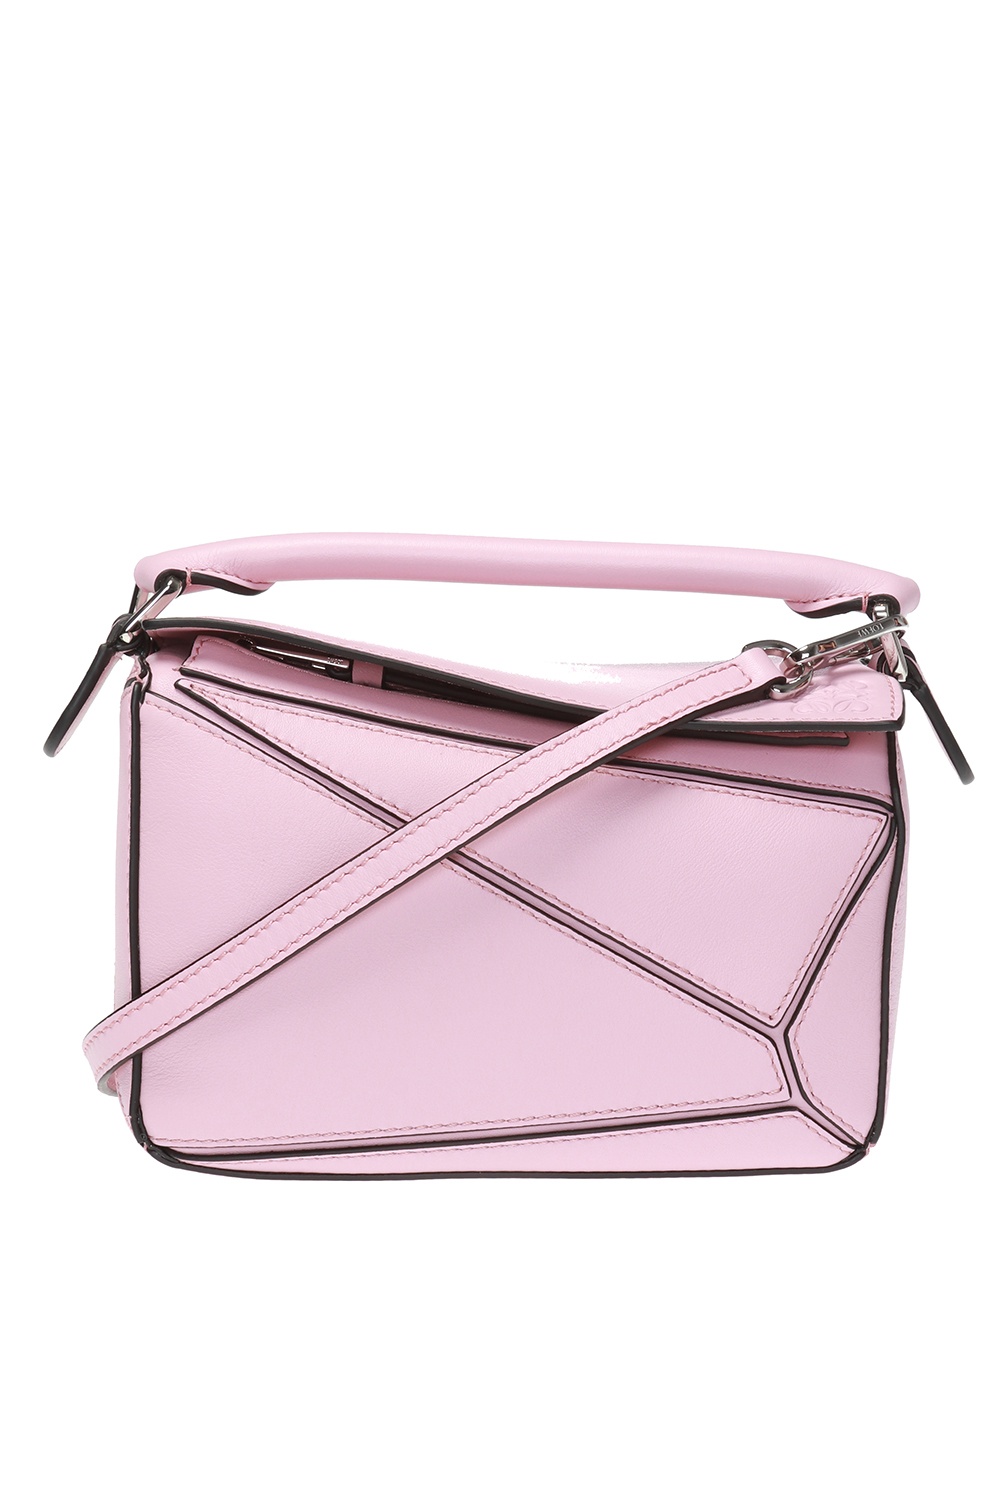 LOEWE Calfskin Mini Puzzle Bag Pastel Pink 516329